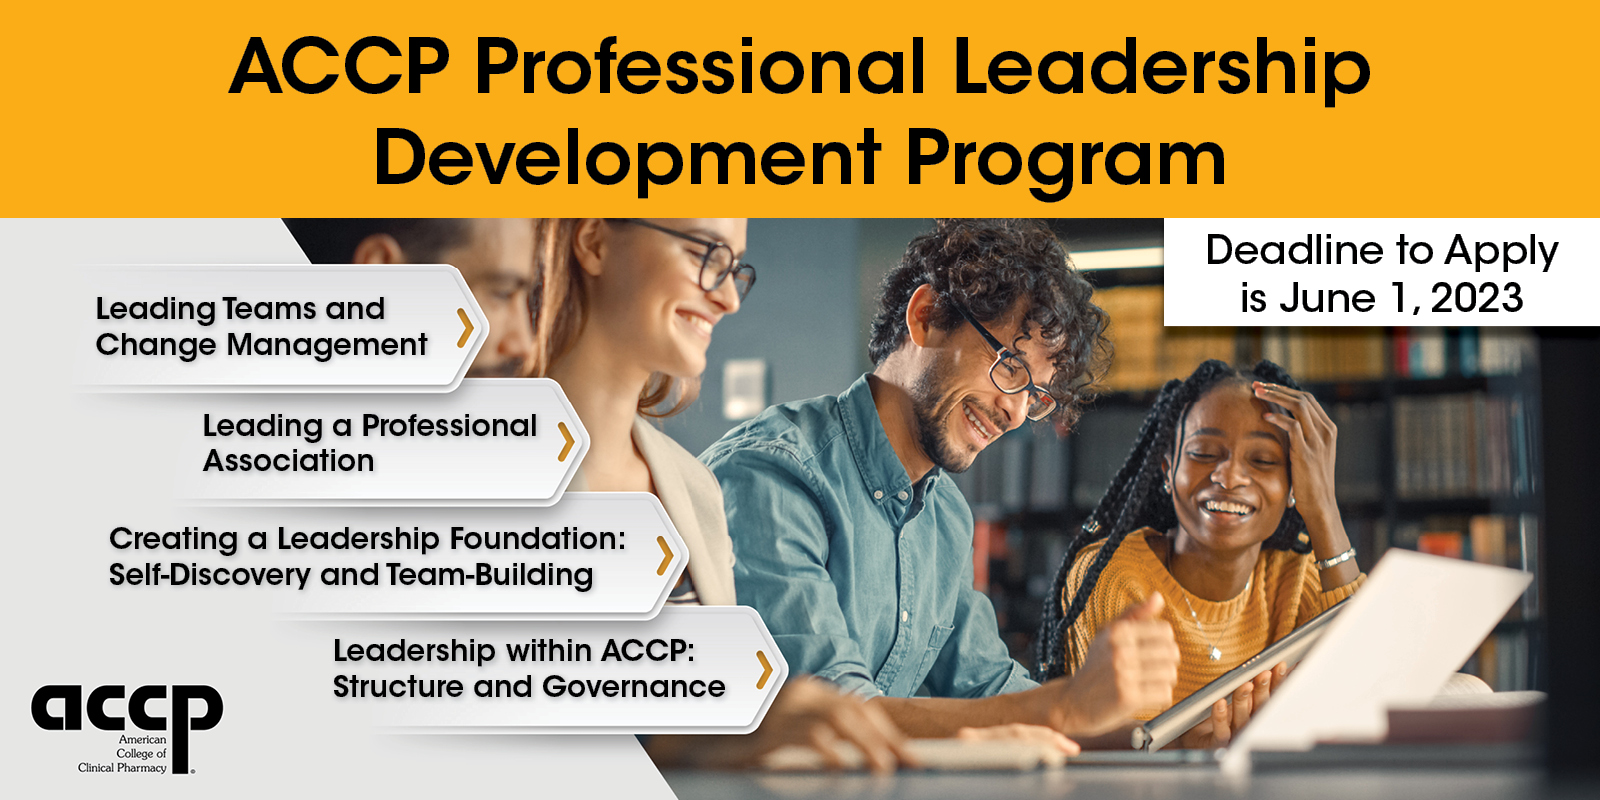 ACCP Professional Leadership Development Program Application Deadline June 1